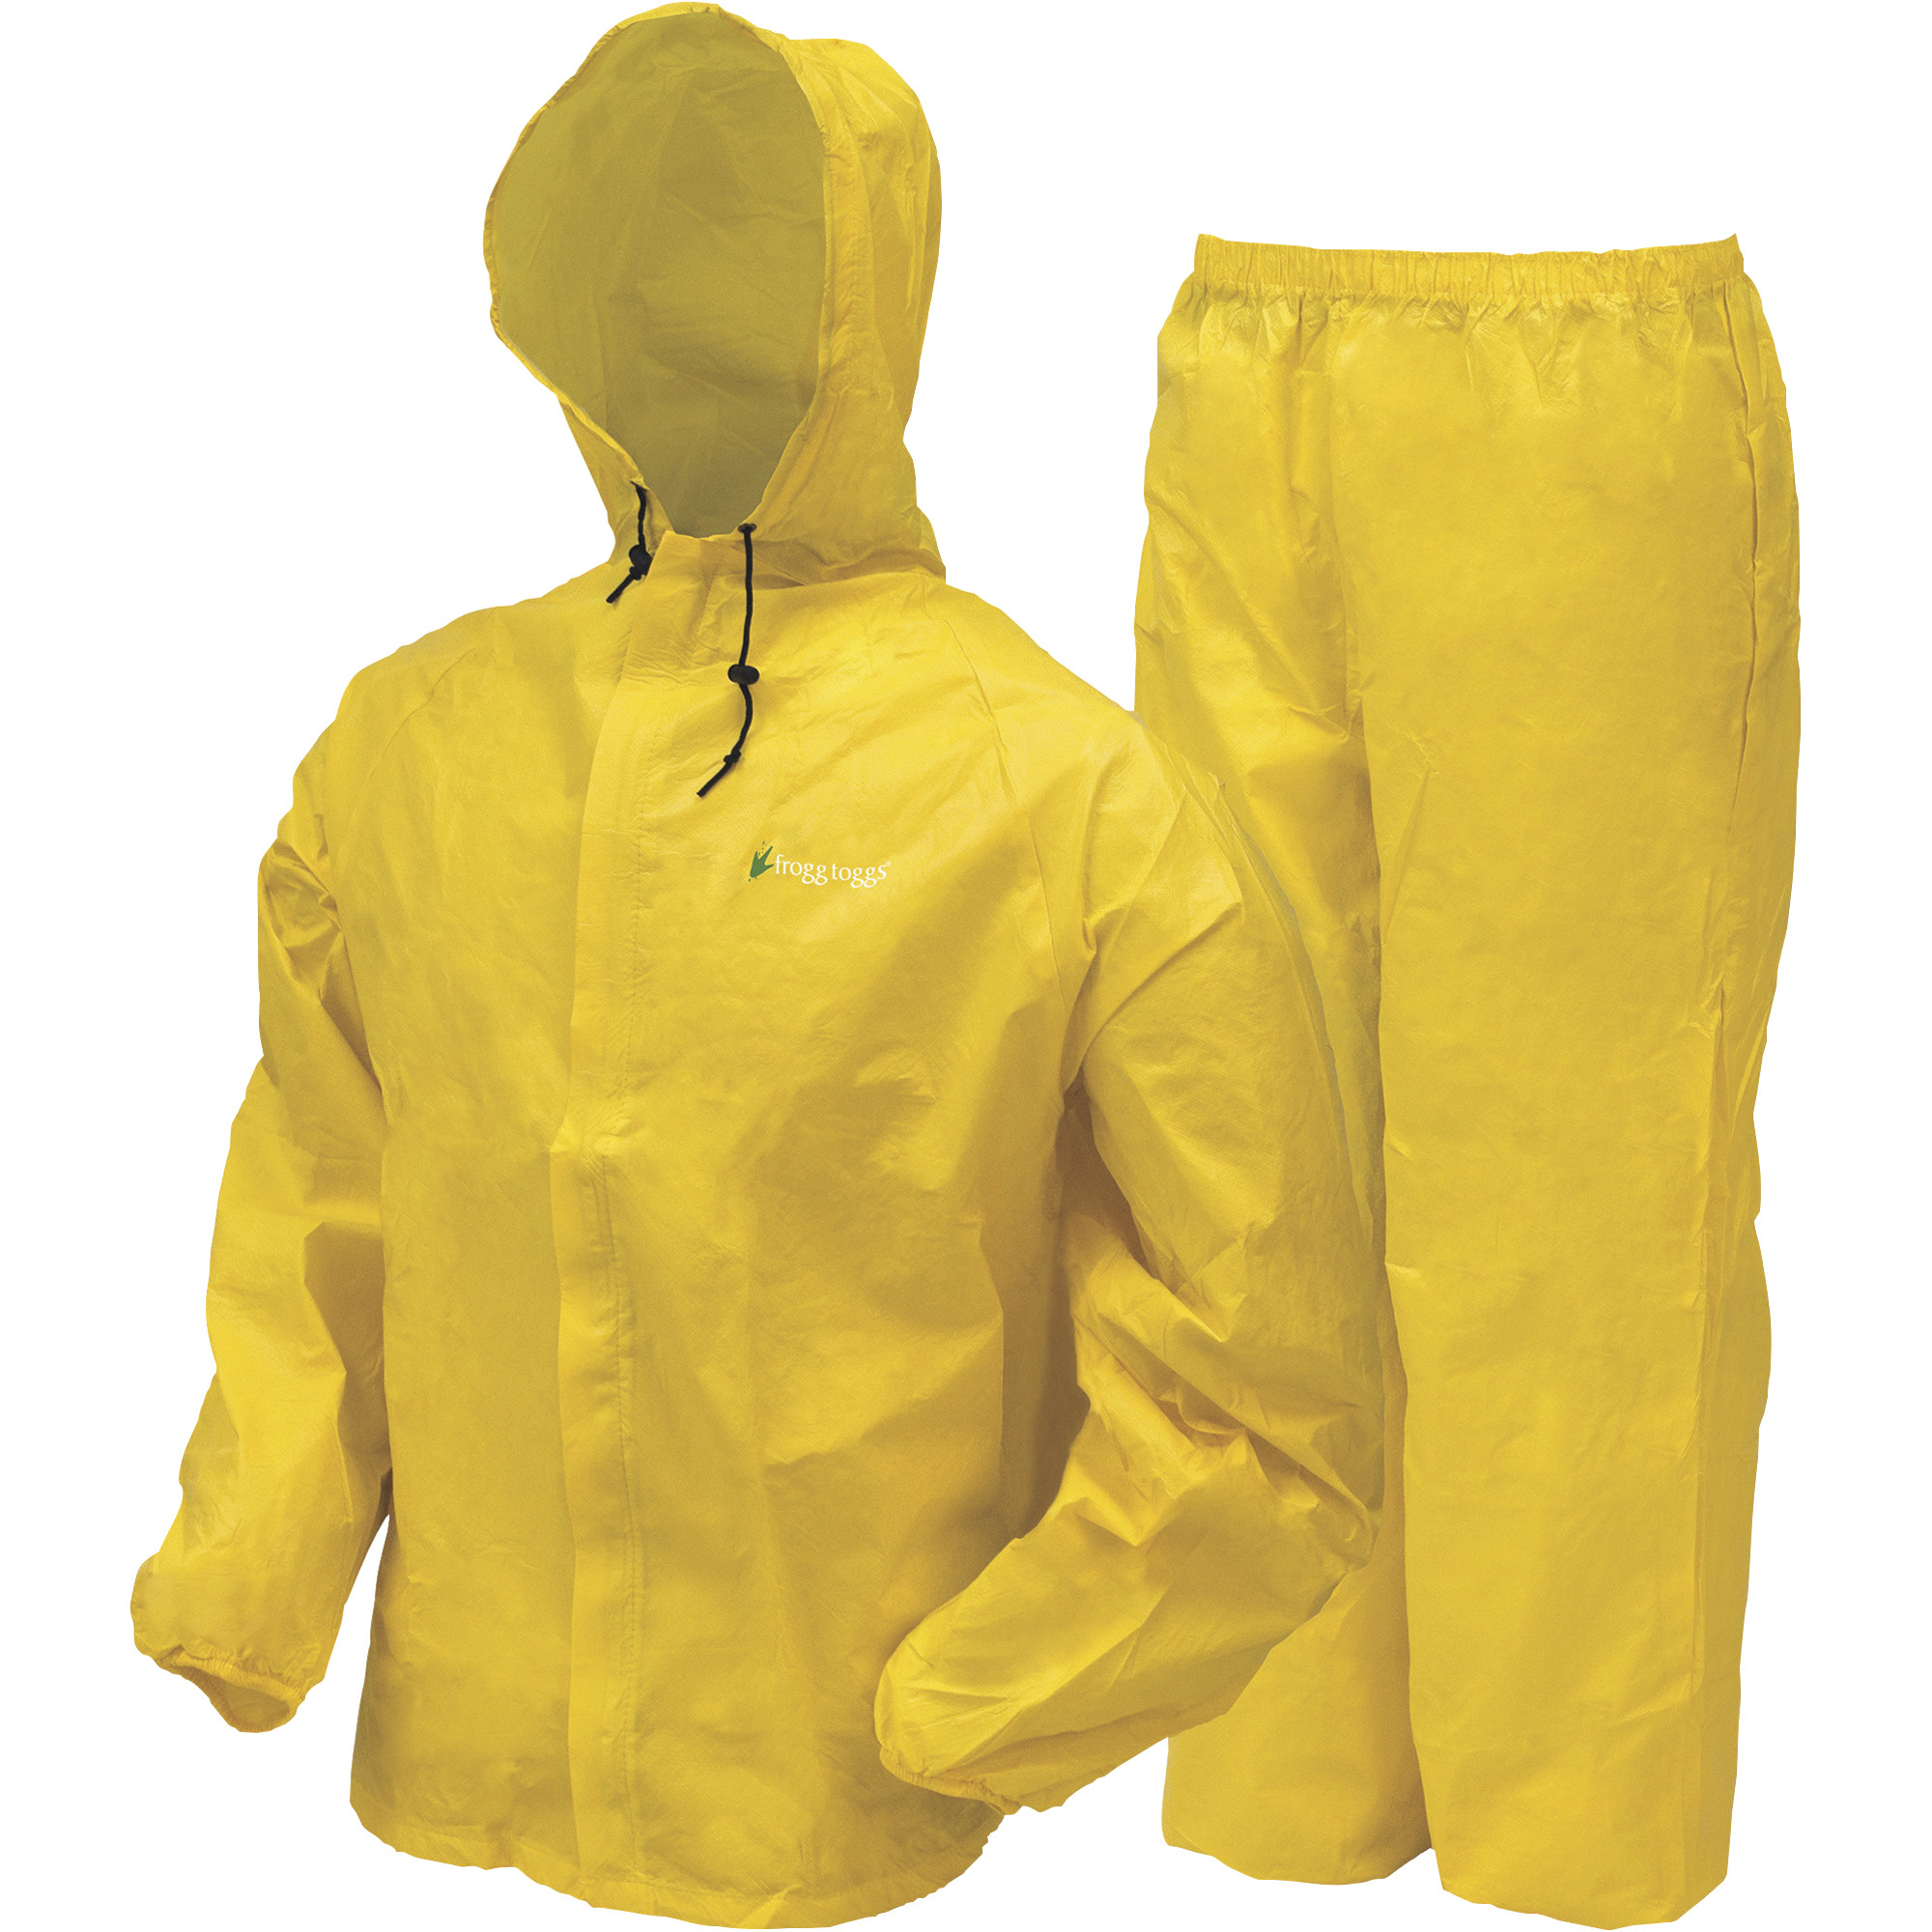 Frogg Toggs Men's Ultra-Lite 2 Jacket and Pants Rain Suit â Bright Yellow, Large, Model UL12104-08LG